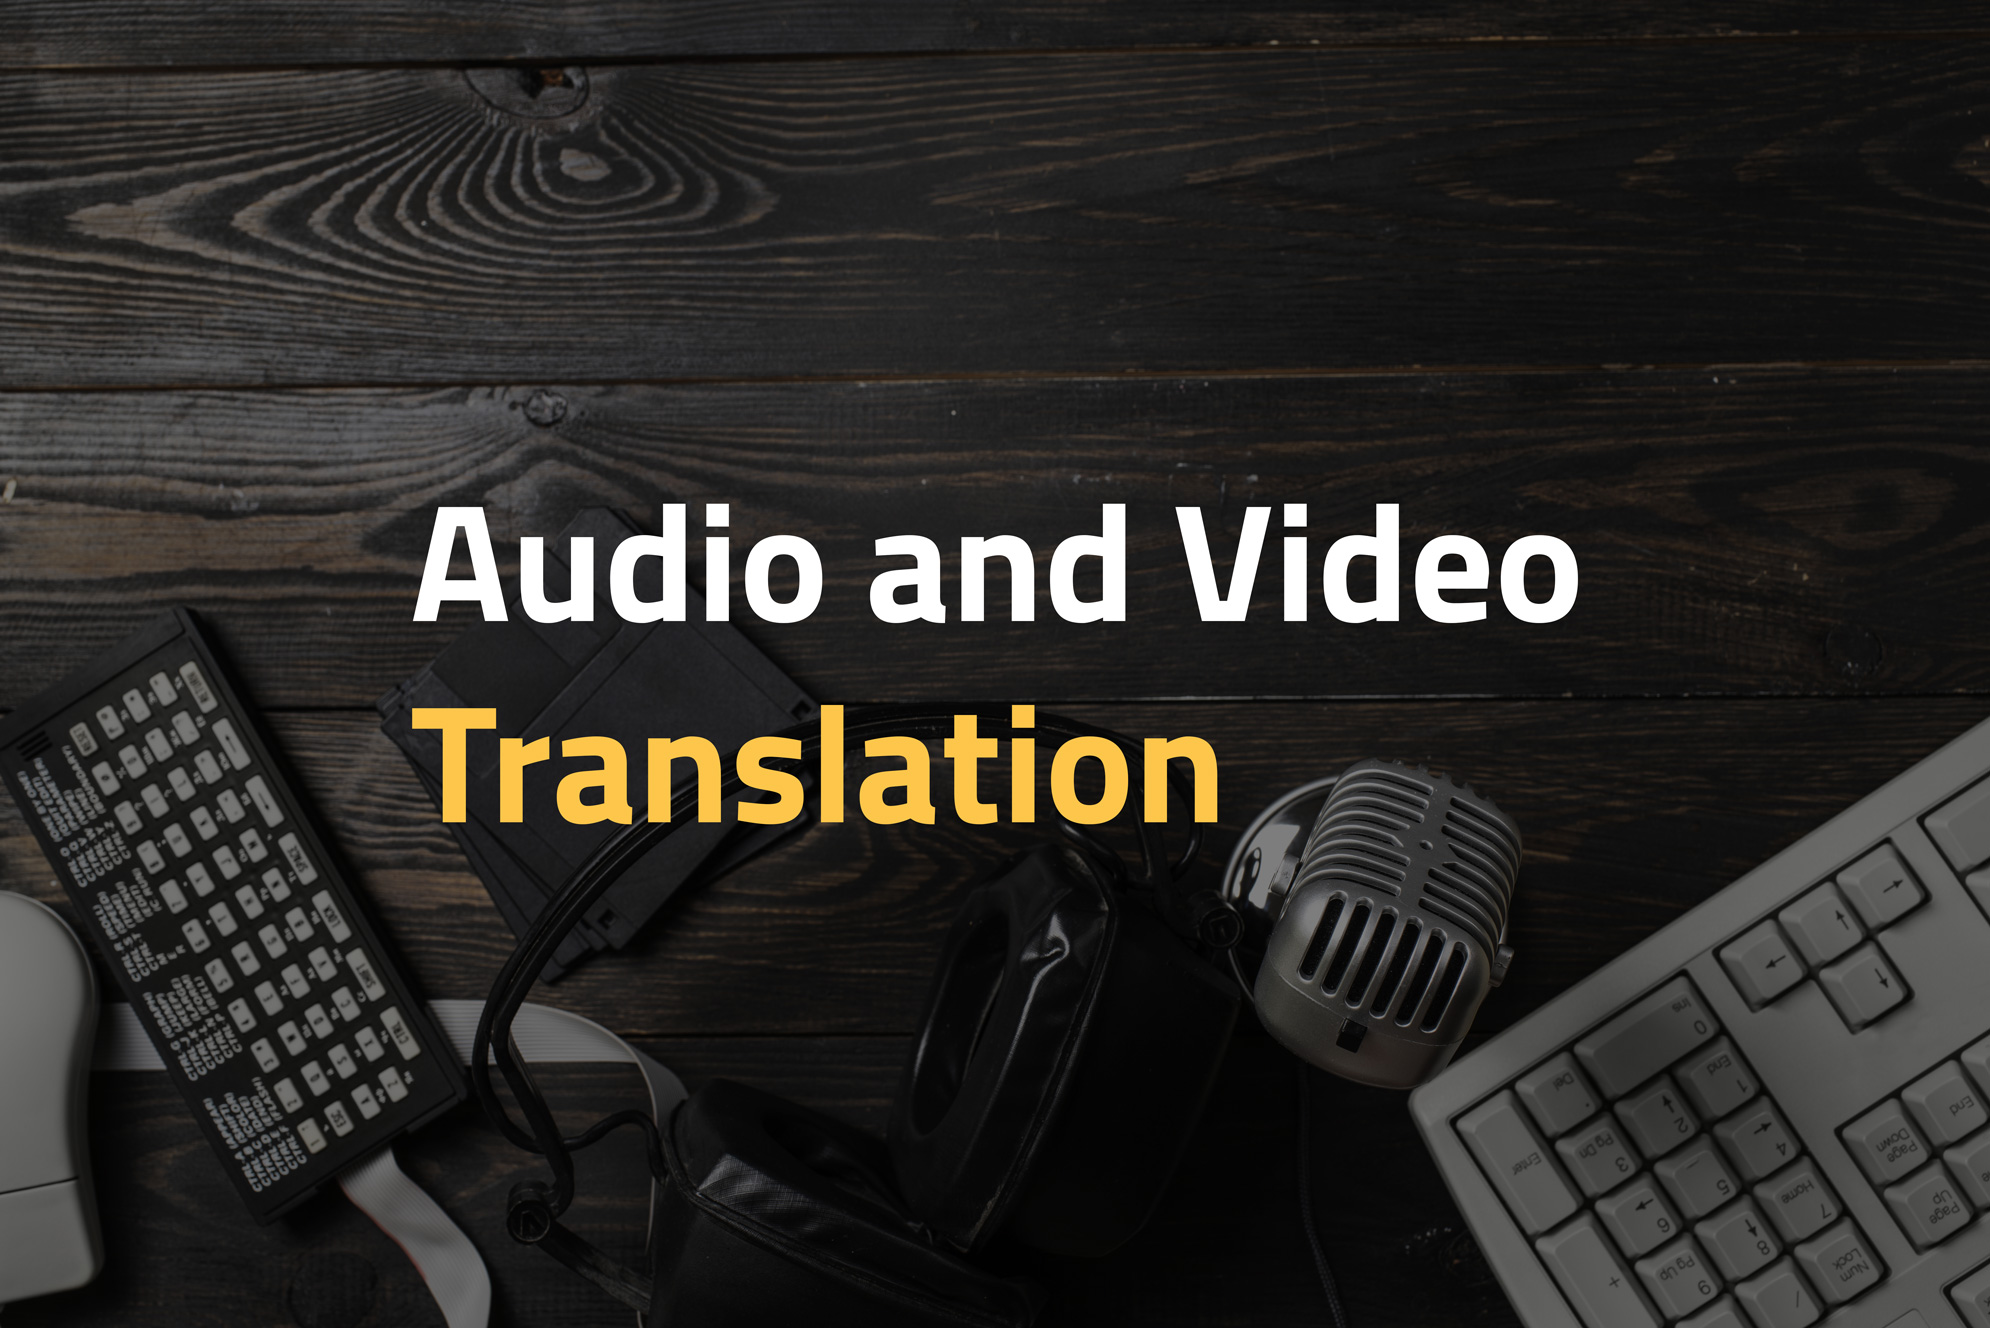 Audio and Video translation